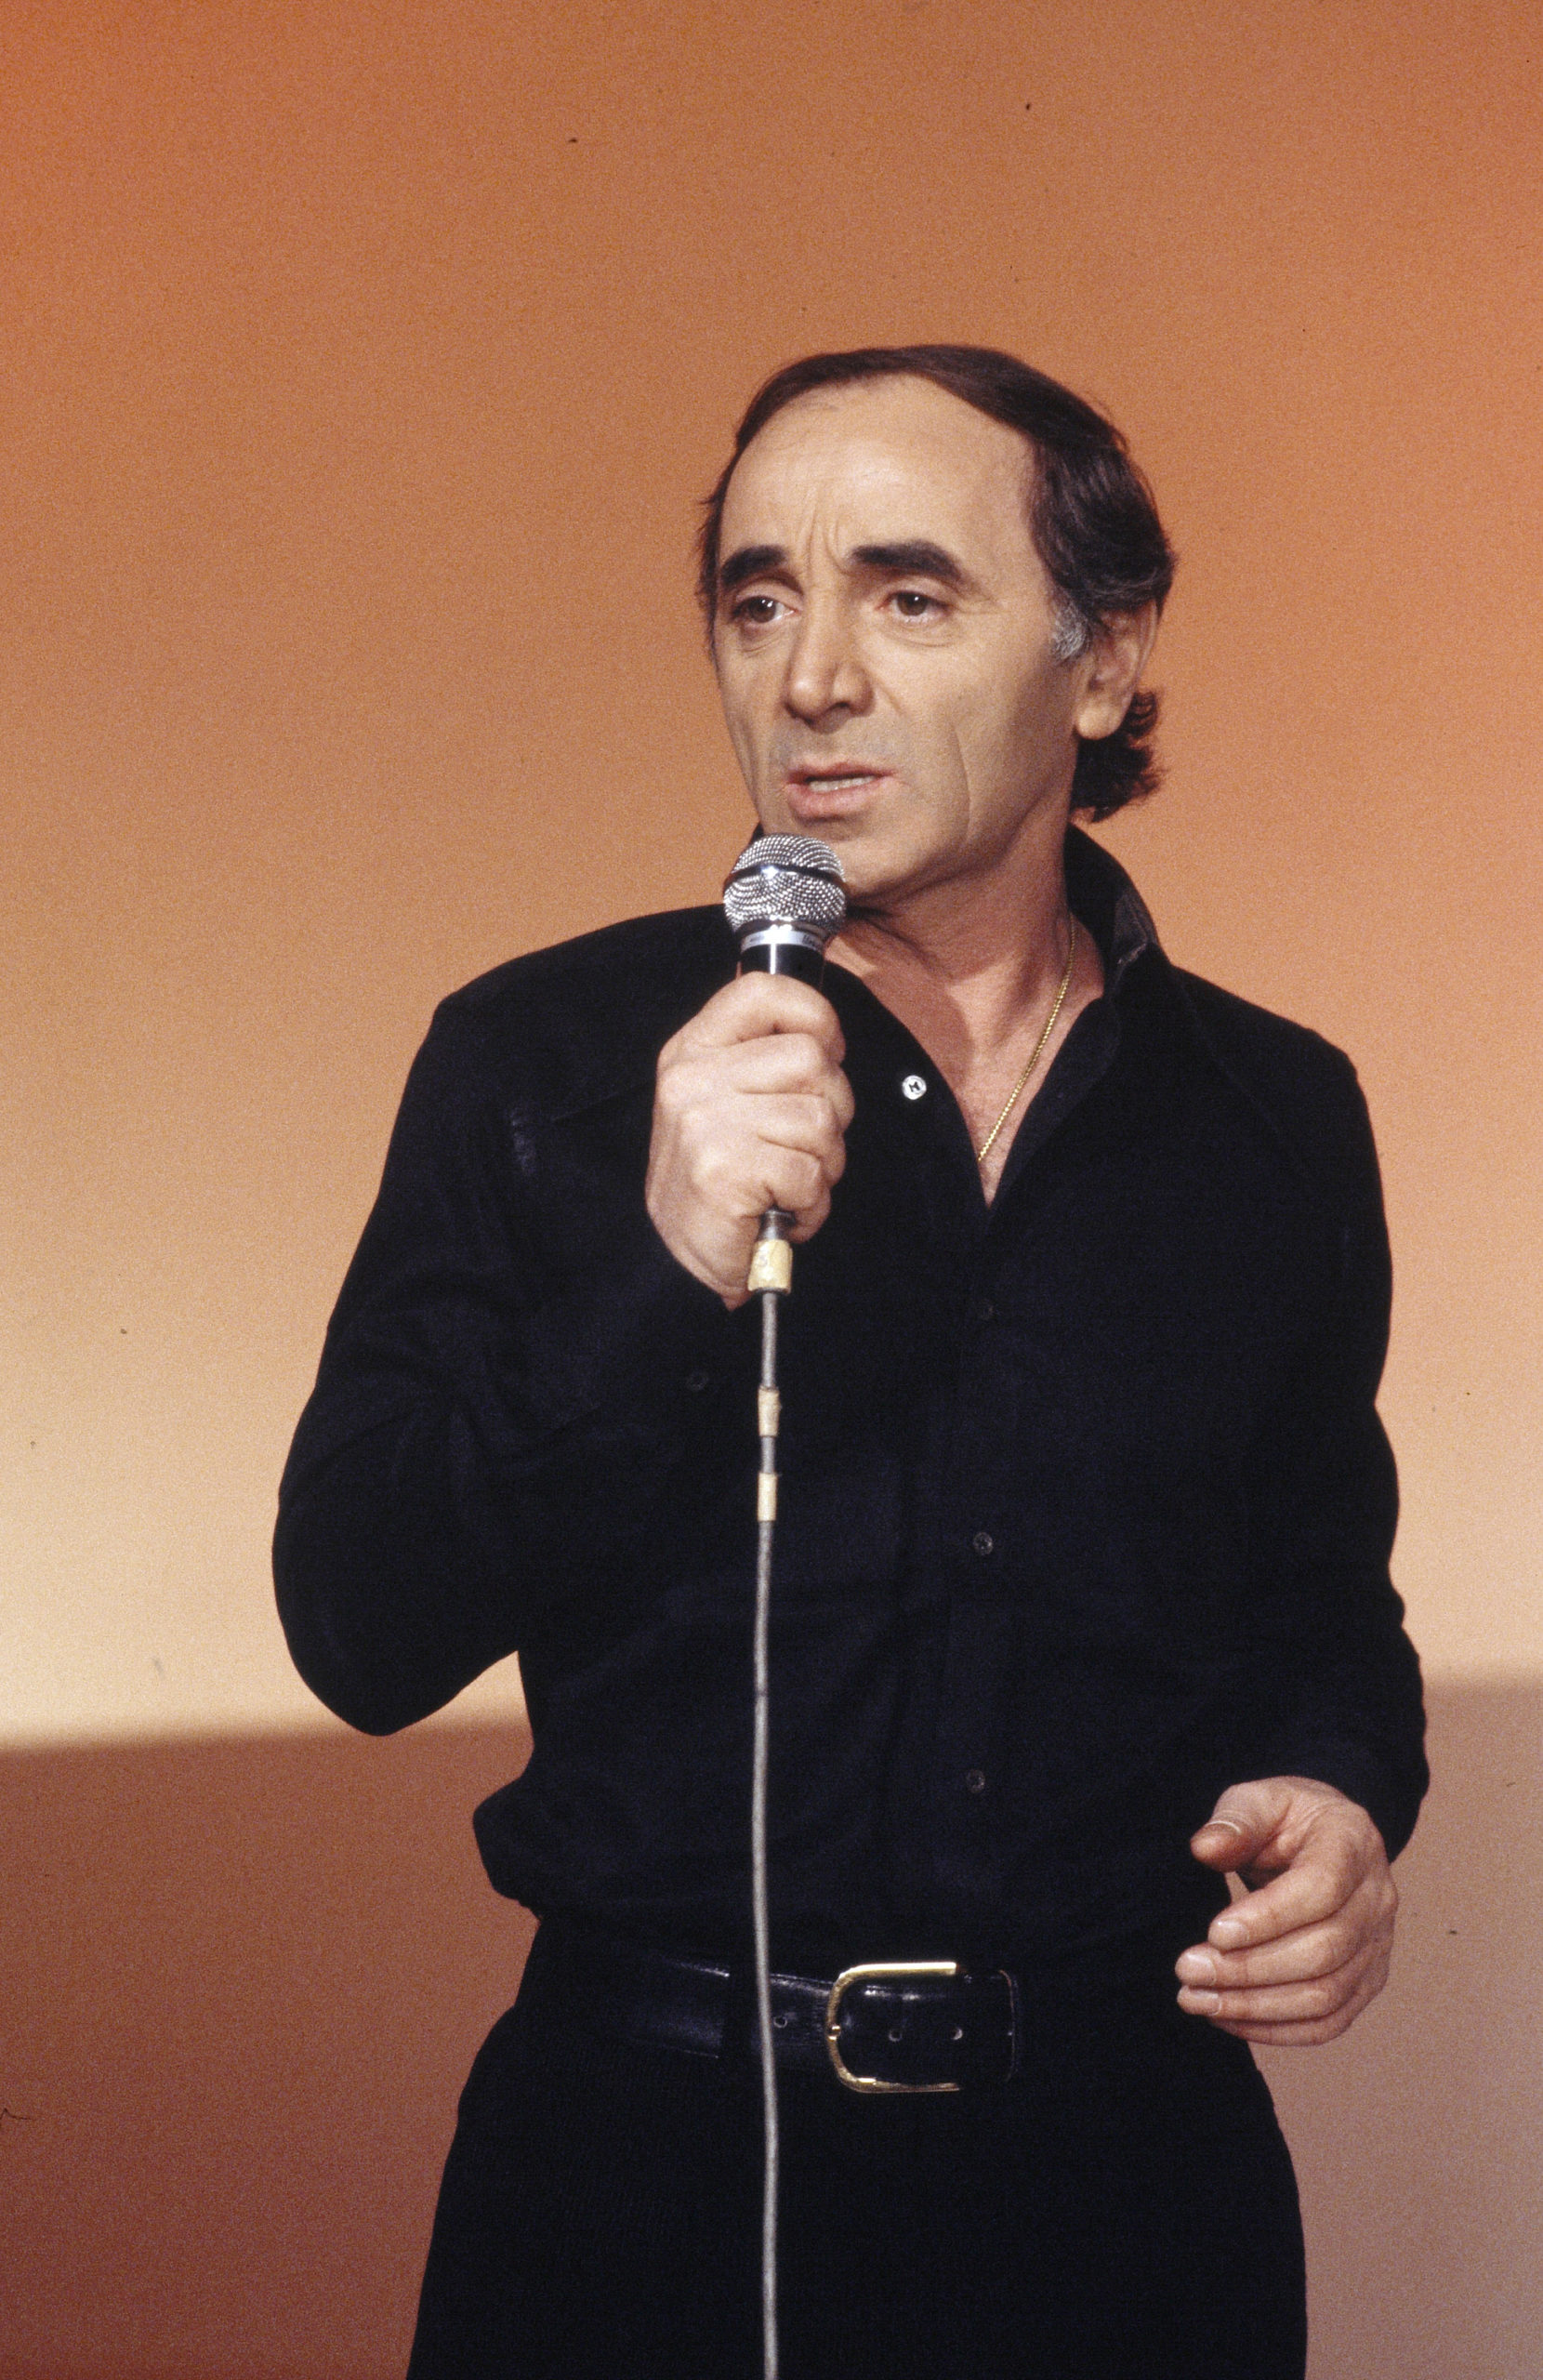 Charles Aznavour aurait eu 98 ans aujourd'hui